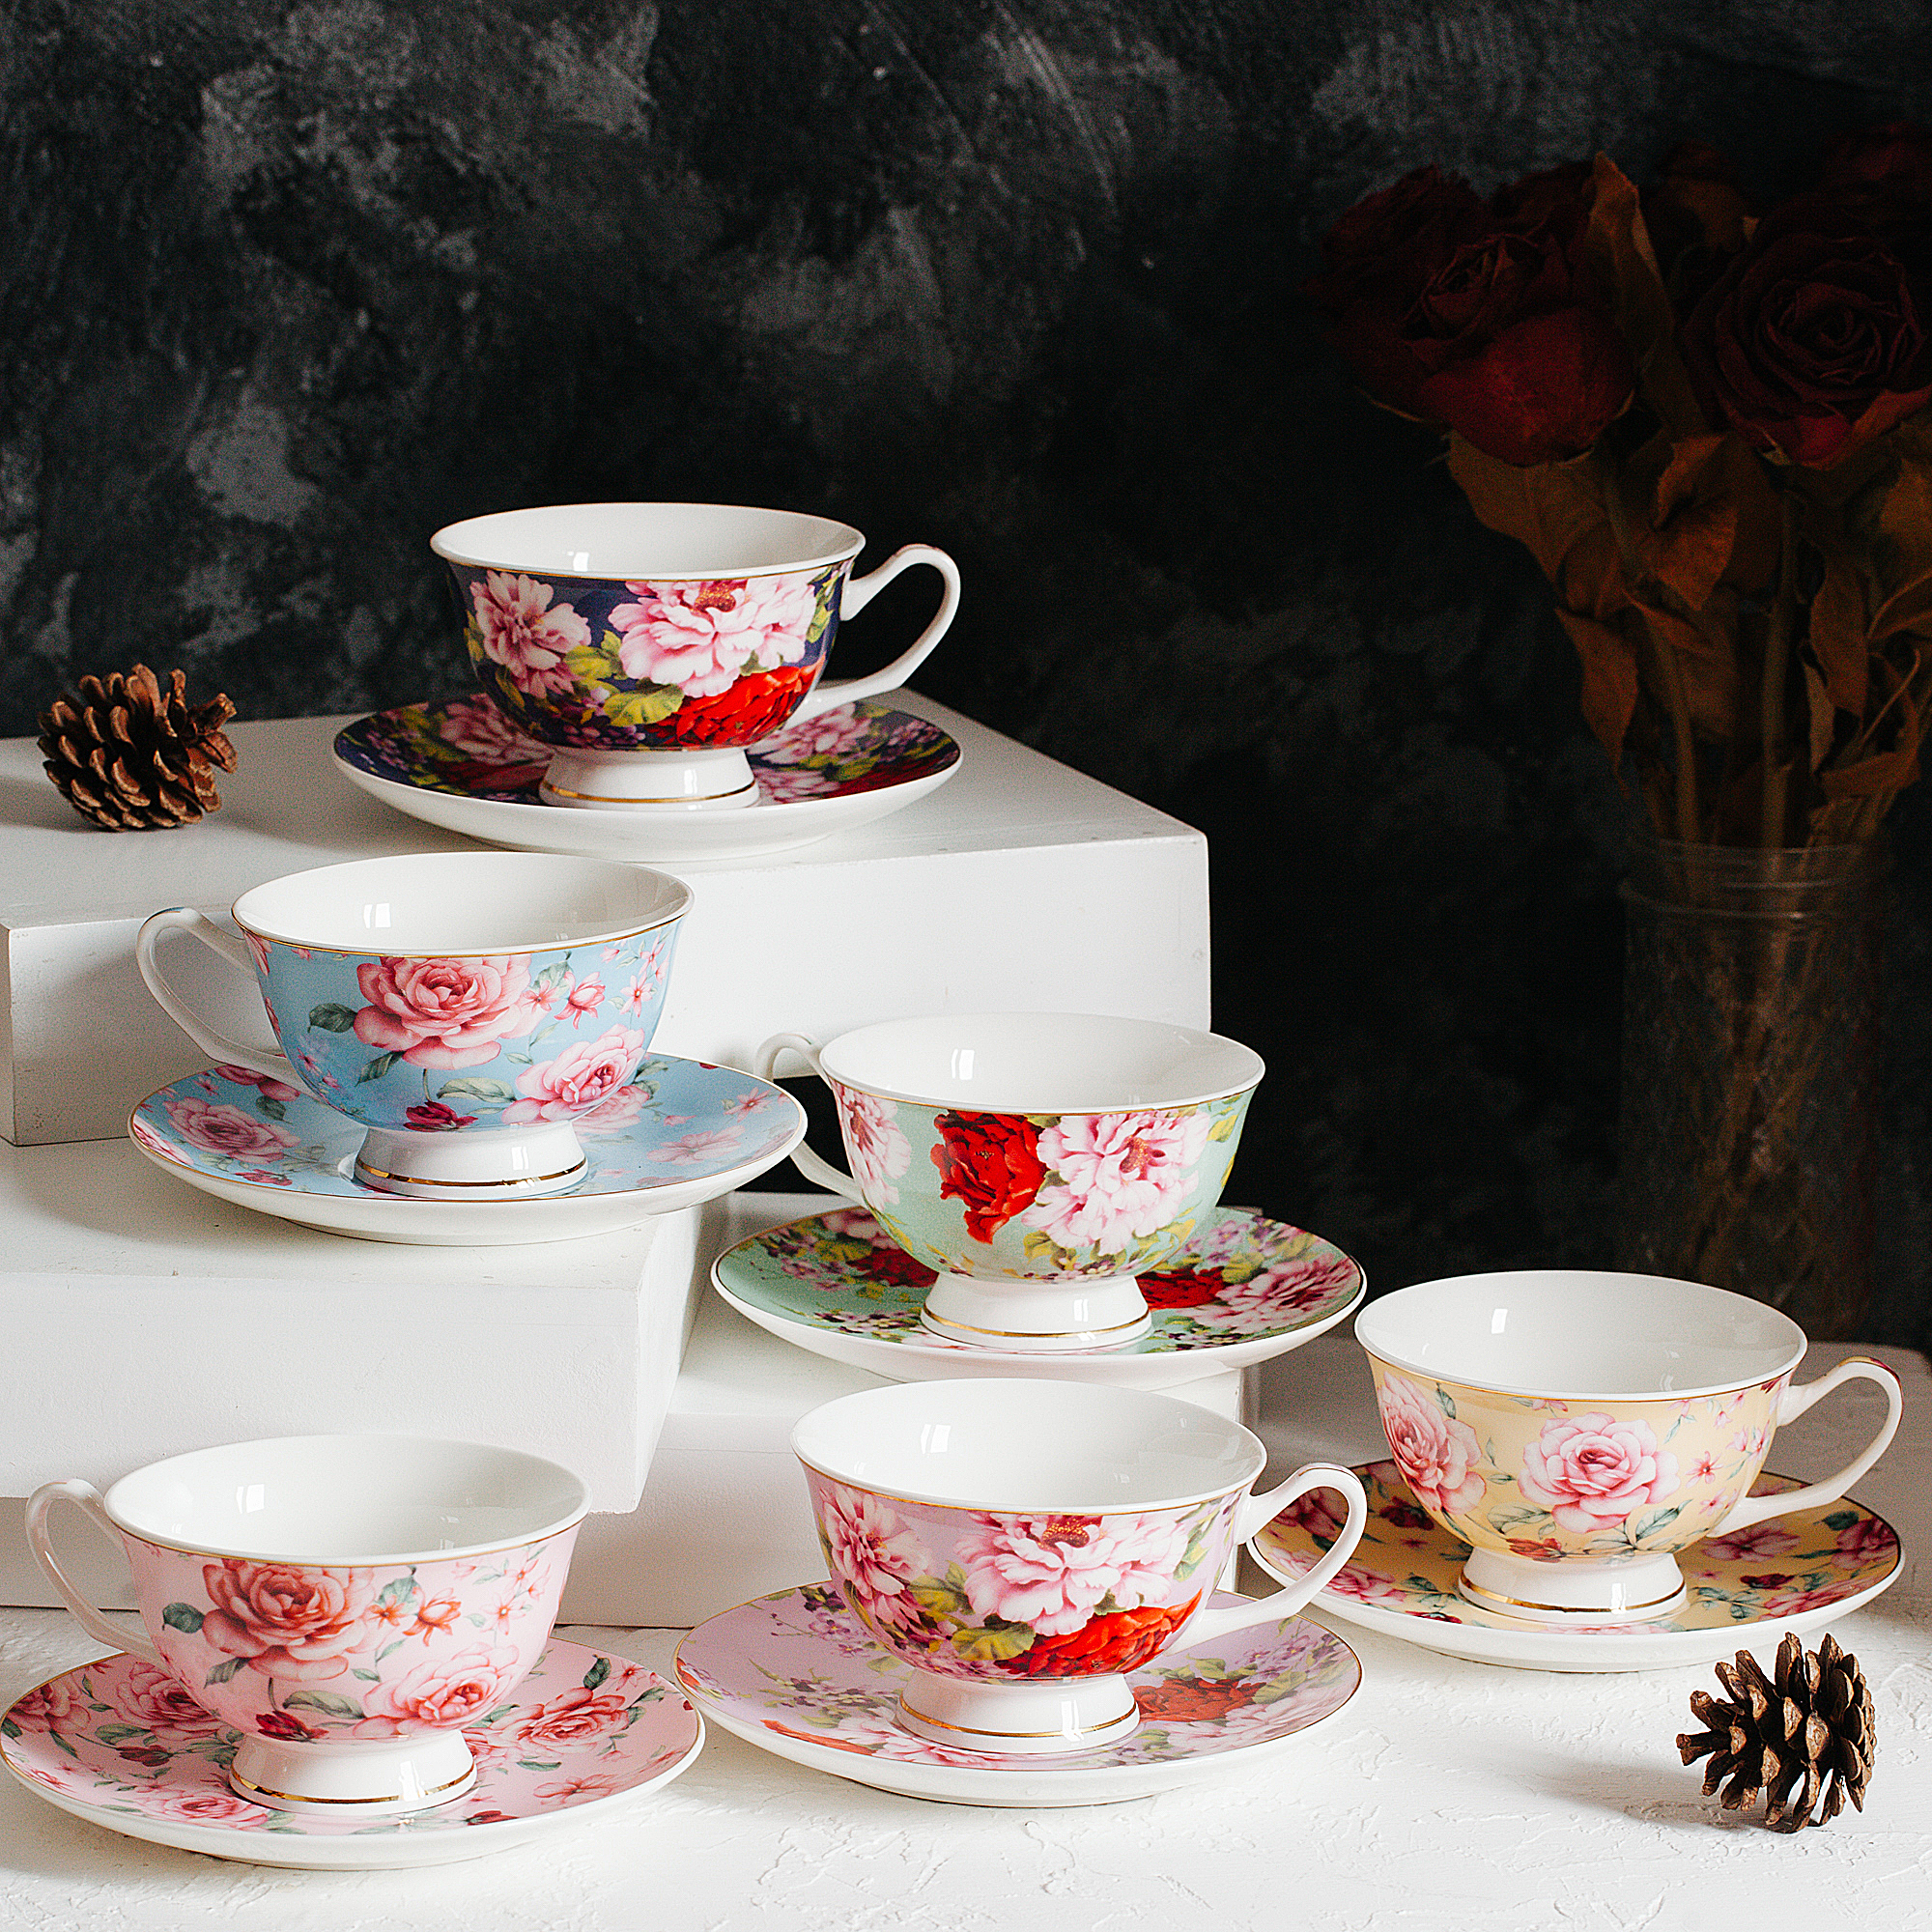 Floral Tea Cups Tea Cup and Saucer Set of 6 8 Oz.Bone China Porcelain